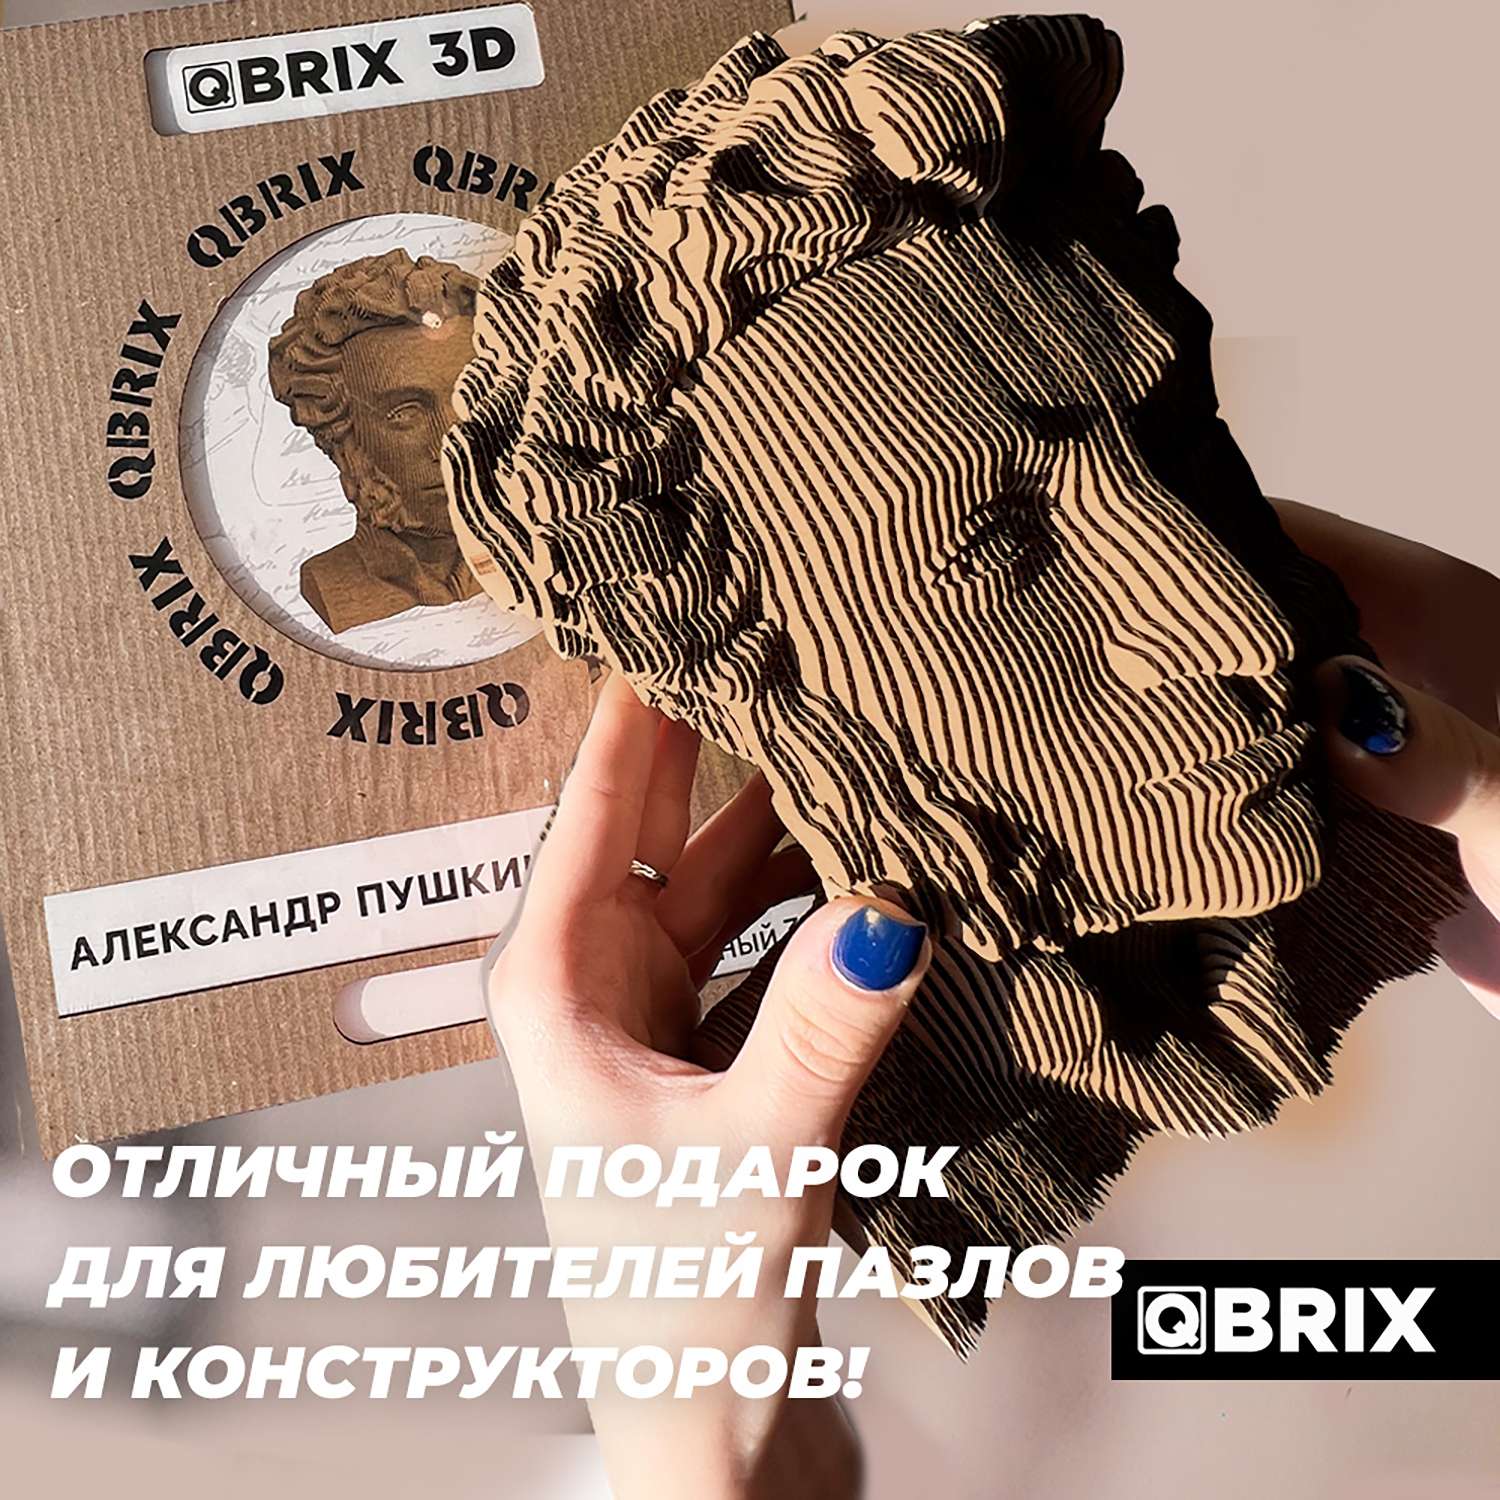 Конструктор QBRIX 3D картонный Александр Пушкин 20014 20014 - фото 3